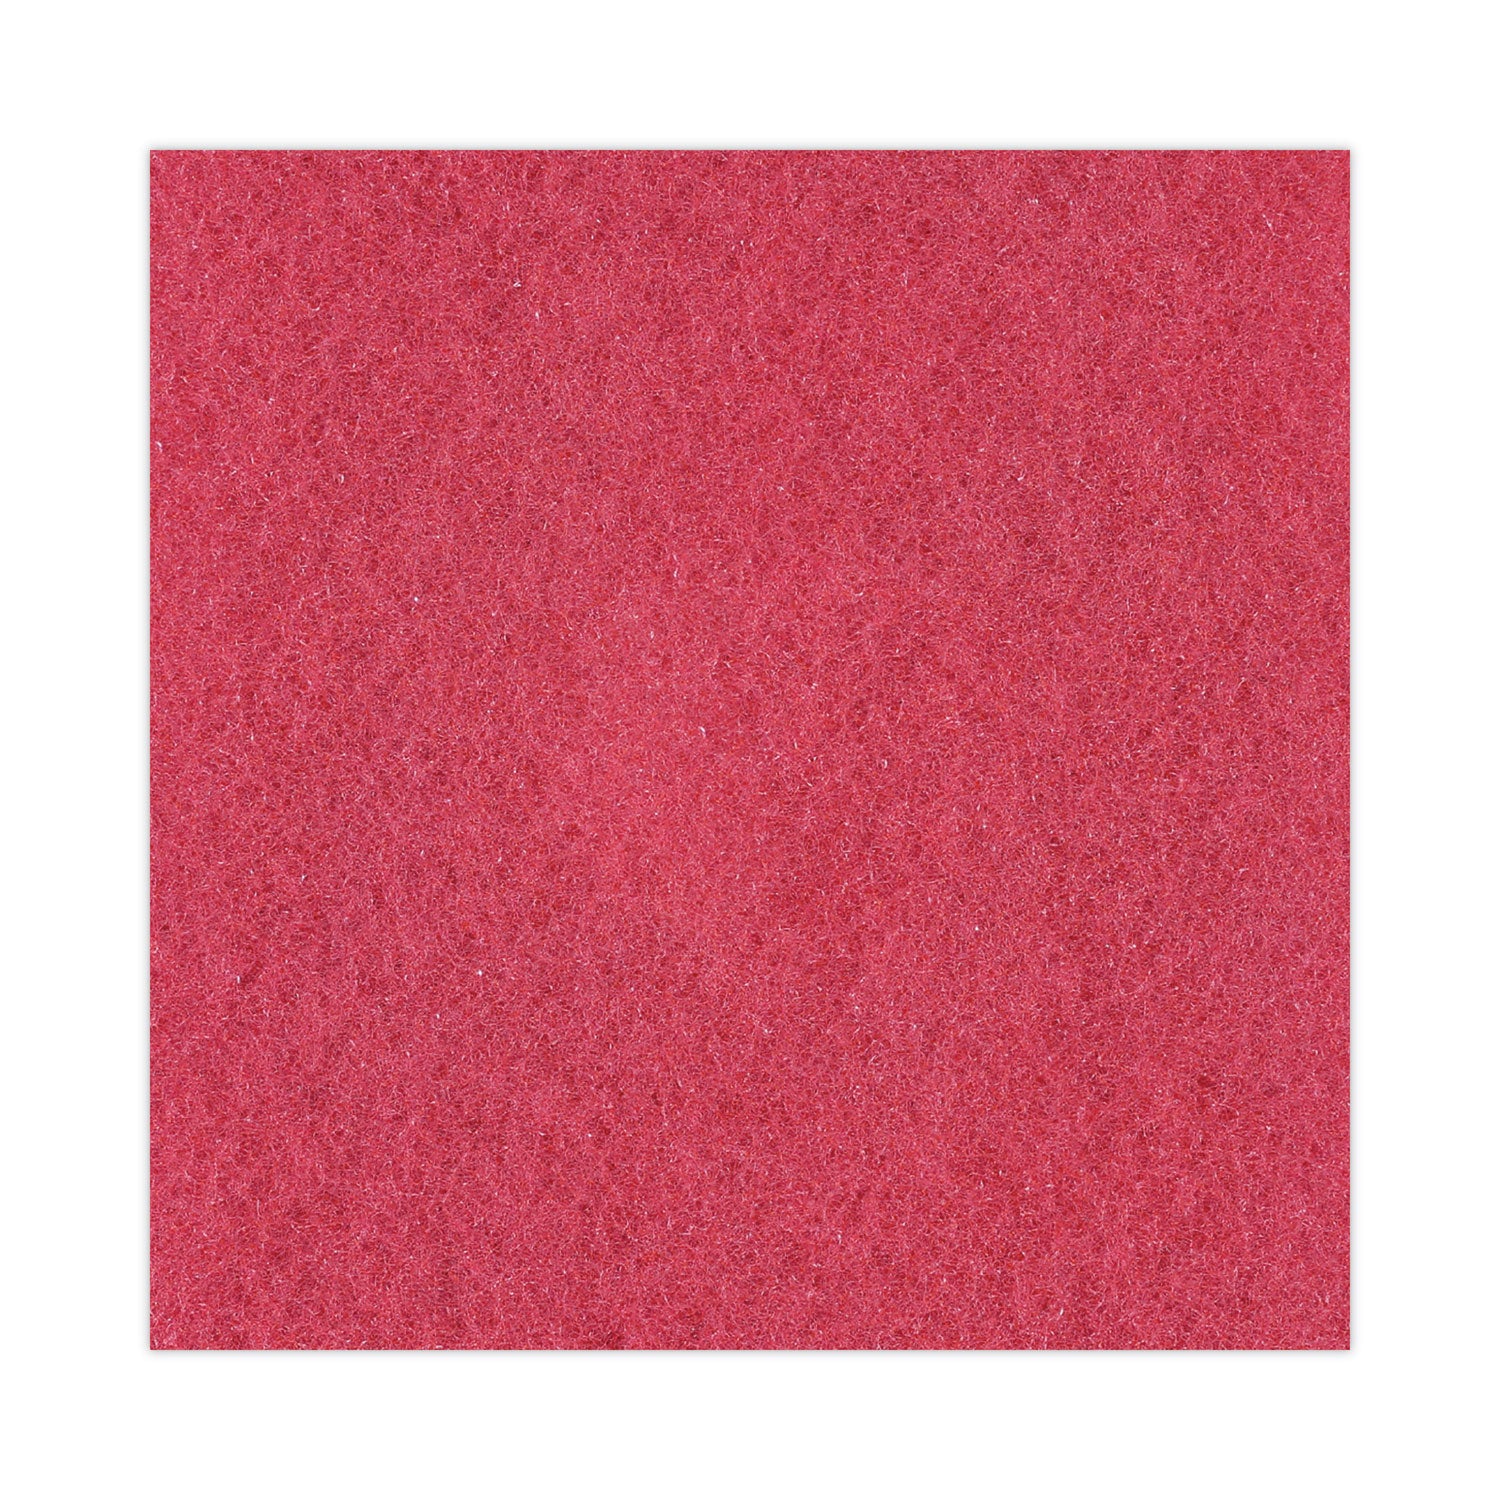 buffing-floor-pads-21-diameter-red-5-carton_bwk4021red - 6